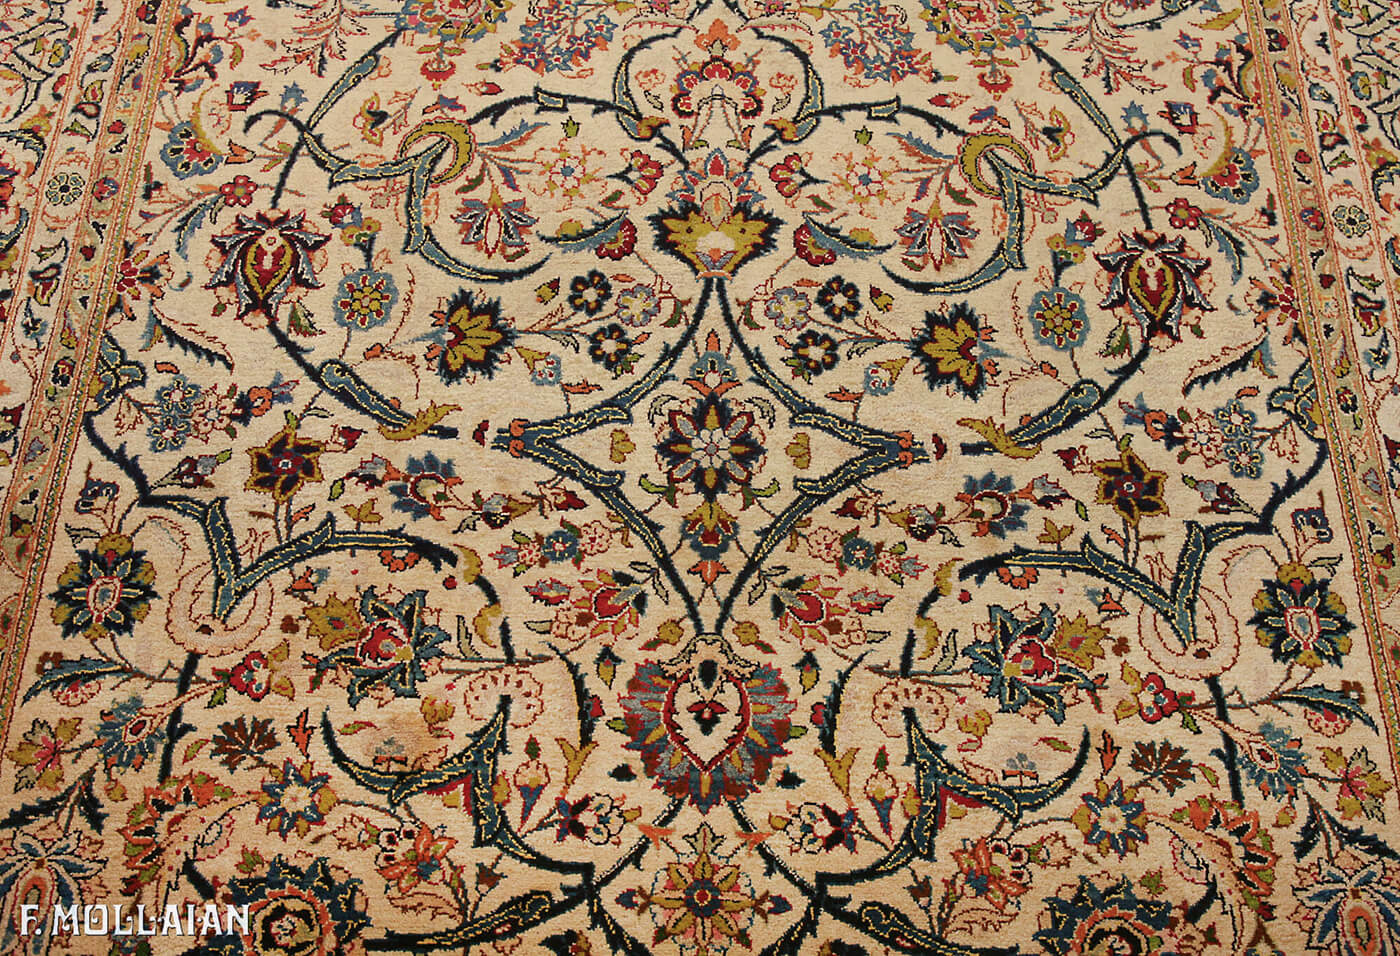 Pair of Antique Persian Kashan Silk “Forutan” Rug n°:51755568